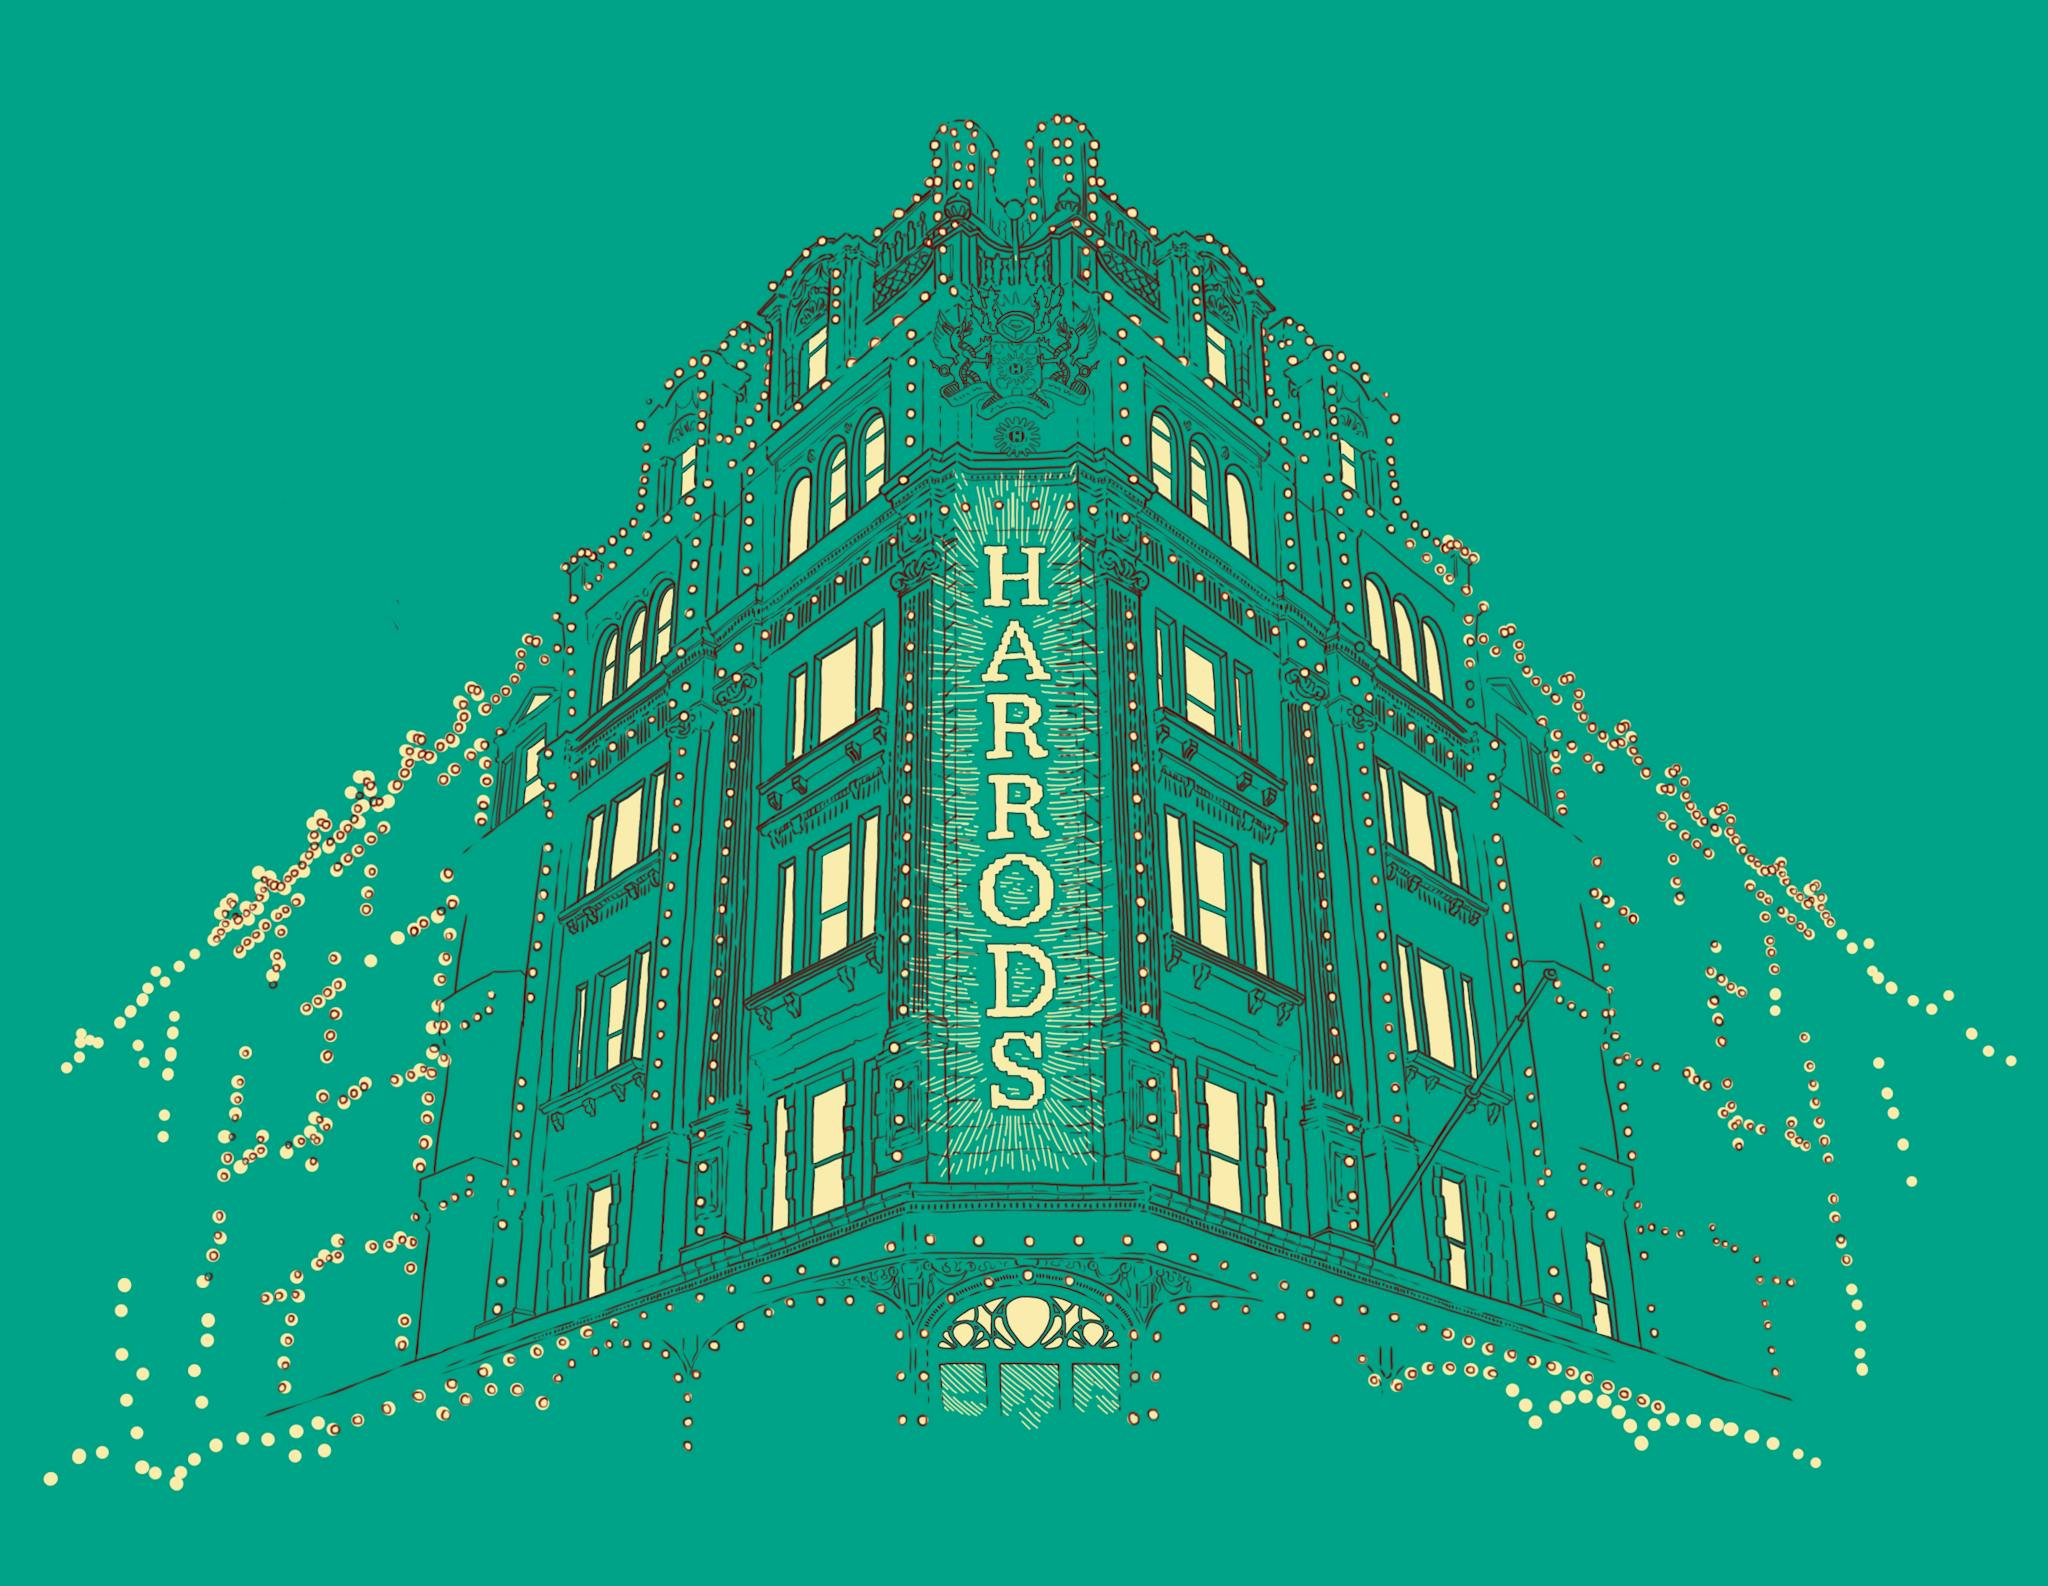 Harrods building with Harrods's green color.